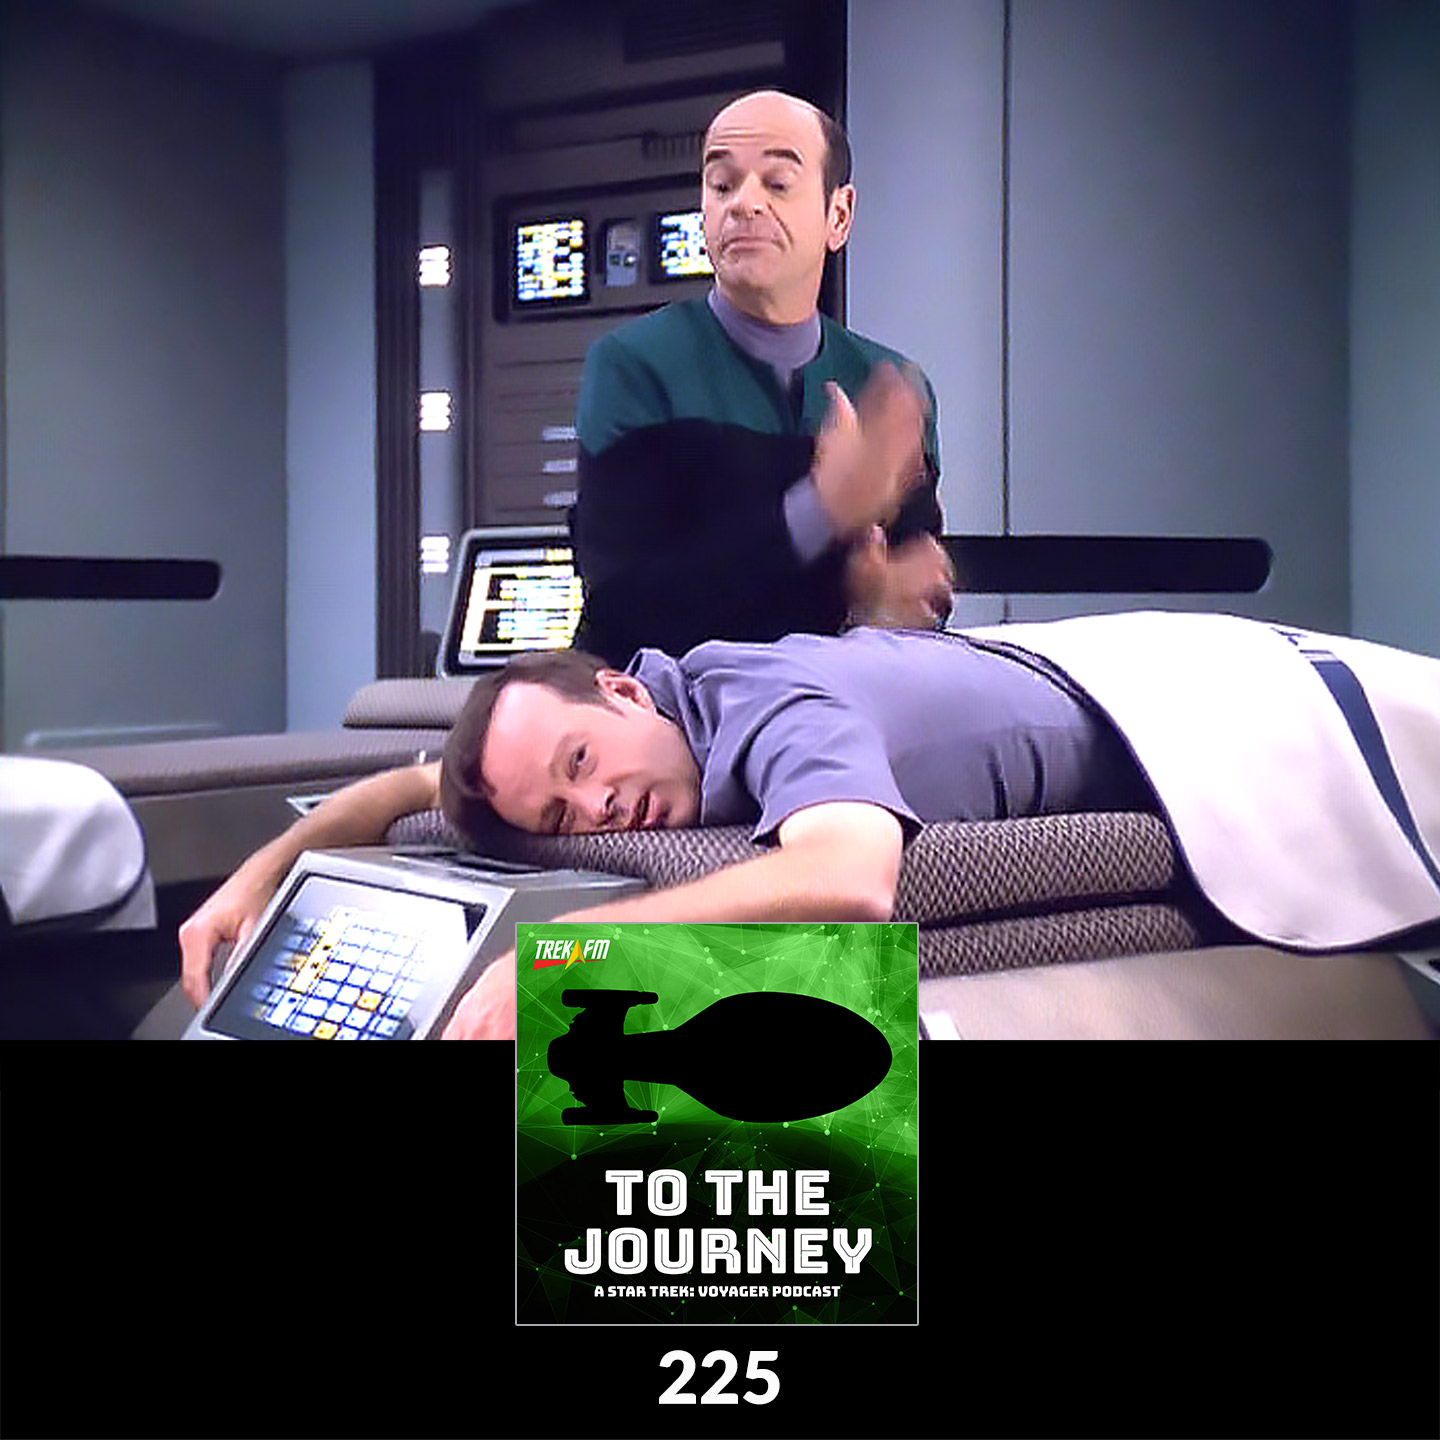 To The Journey 225: Emergency Massage Hologram - "Pathfinder" Commentary.